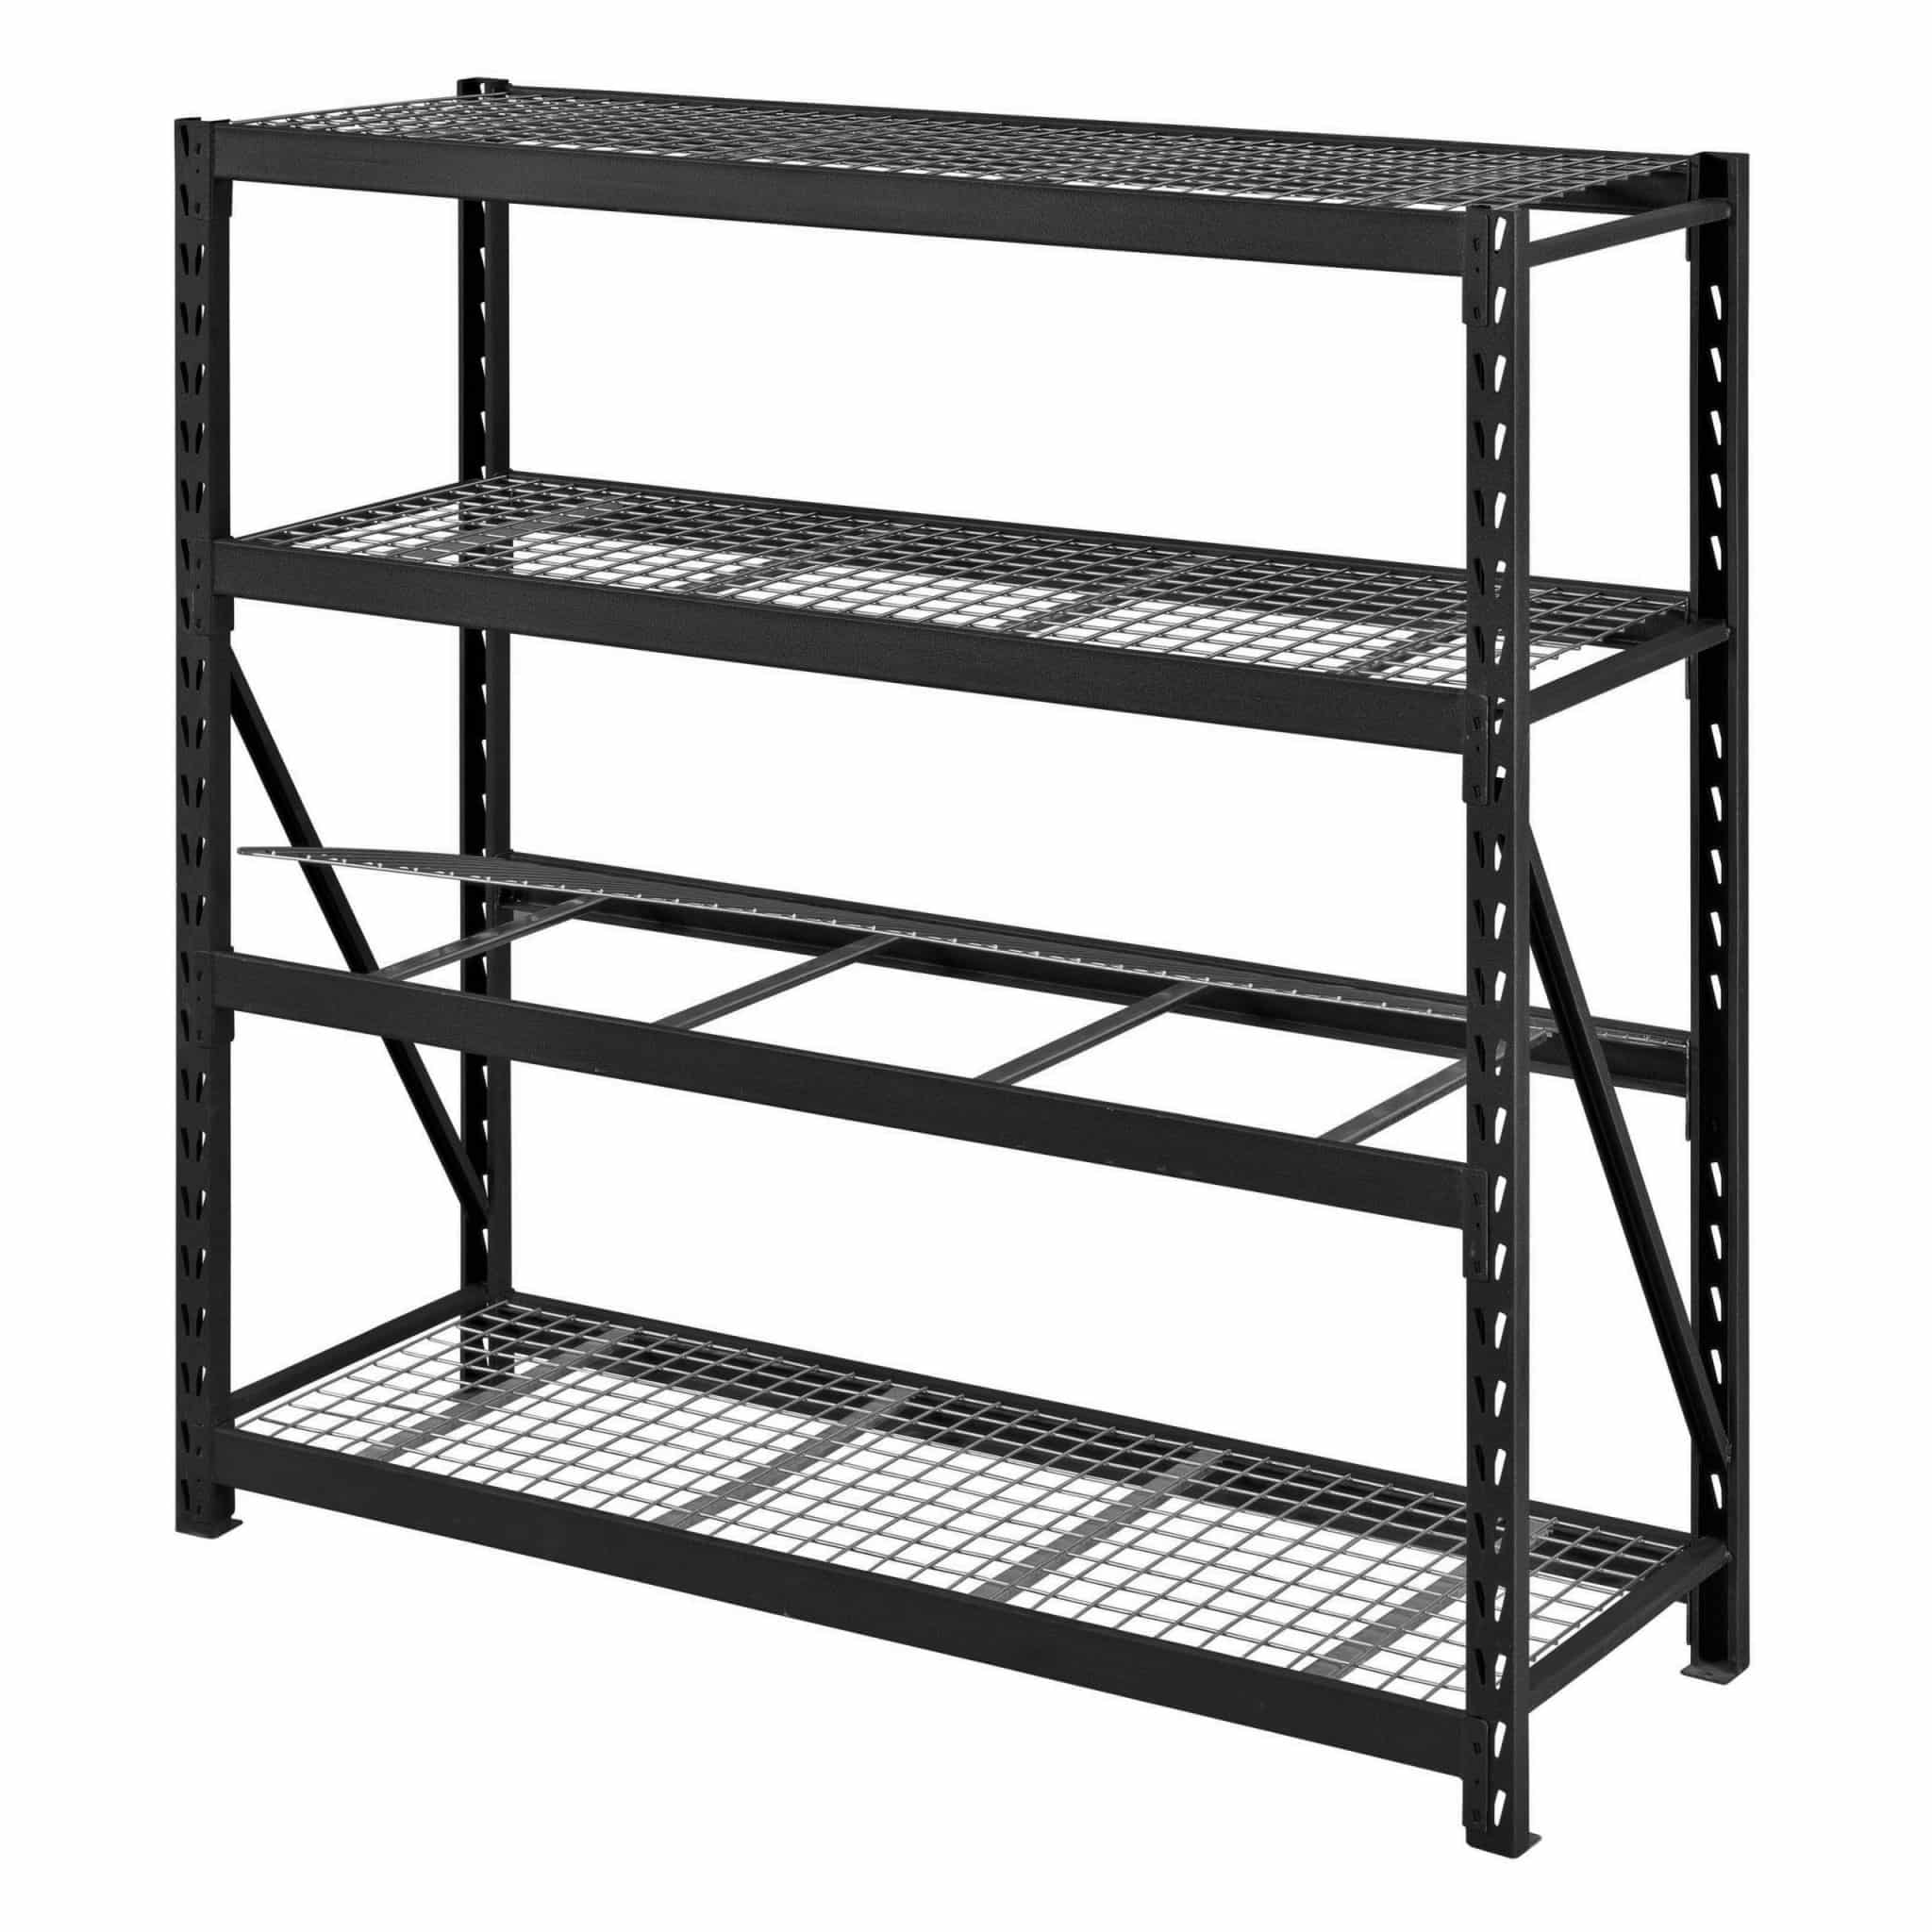 Member's Mark 4-Shelf Industrial Storage Rack (Black)